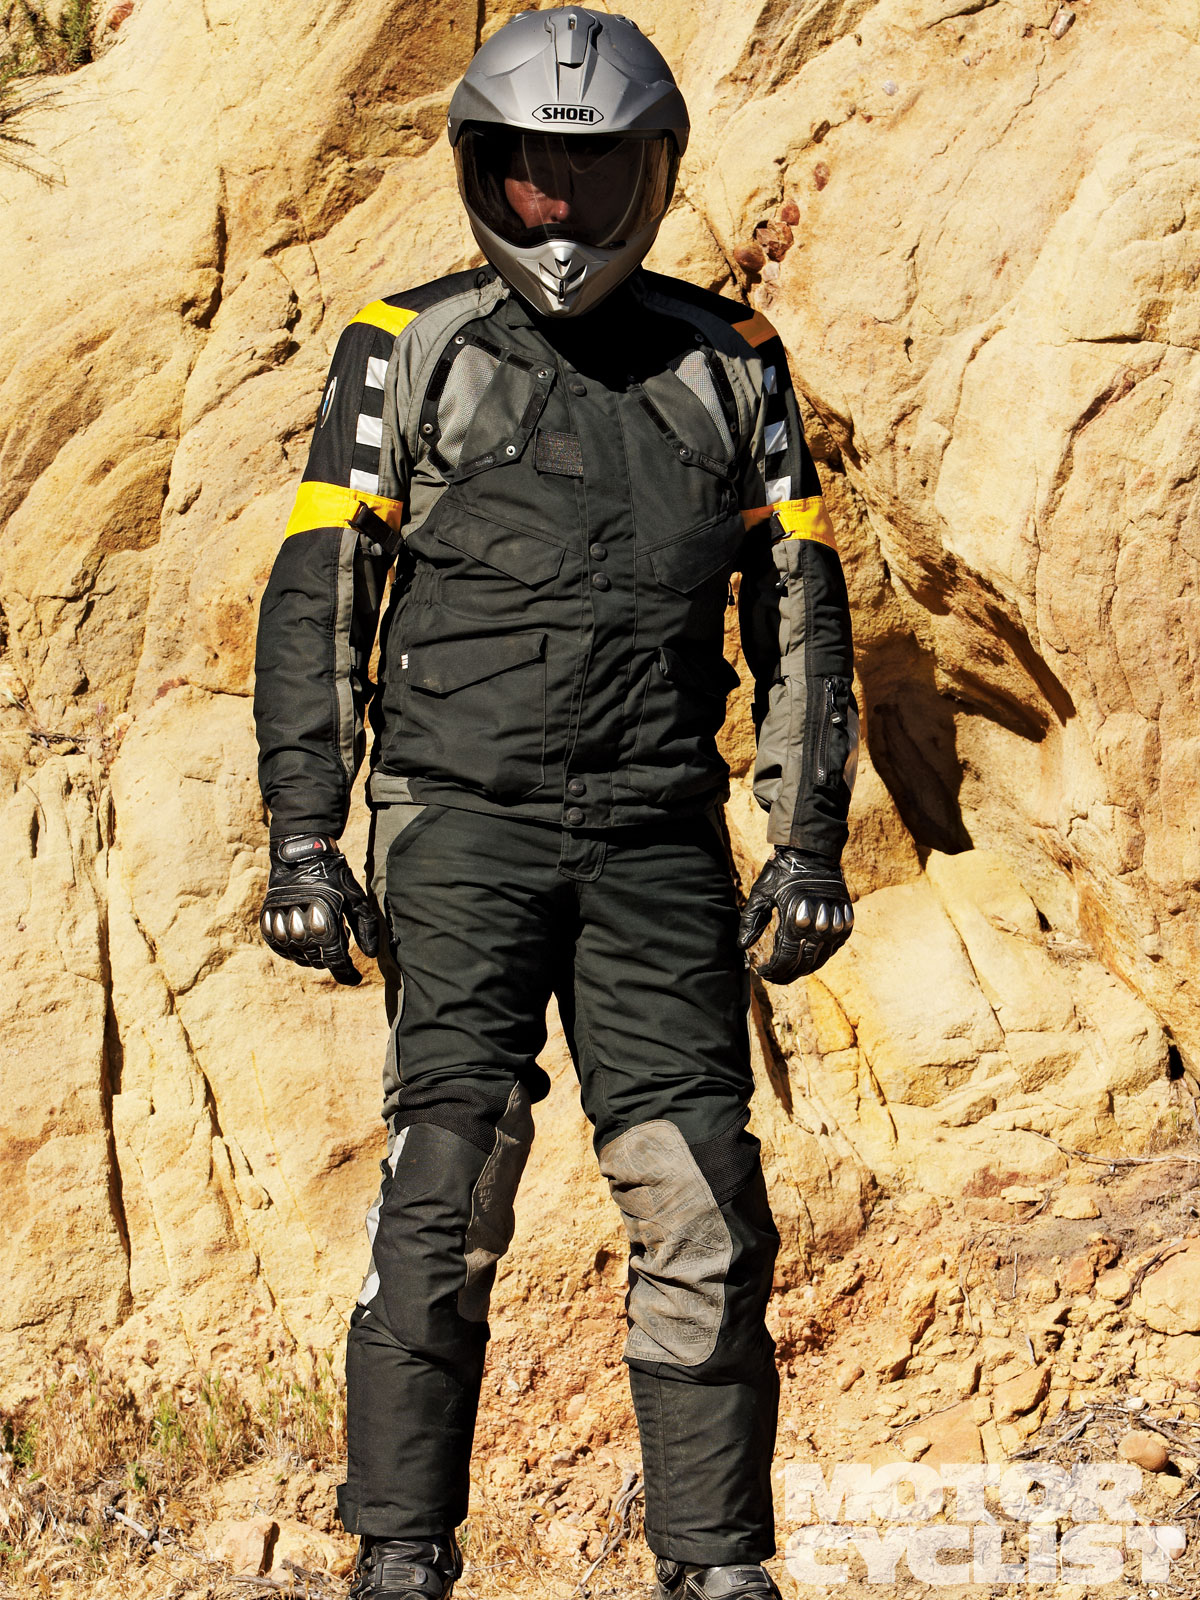 MC Tested: BMW Rallye 3 Suit | Motorcyclist